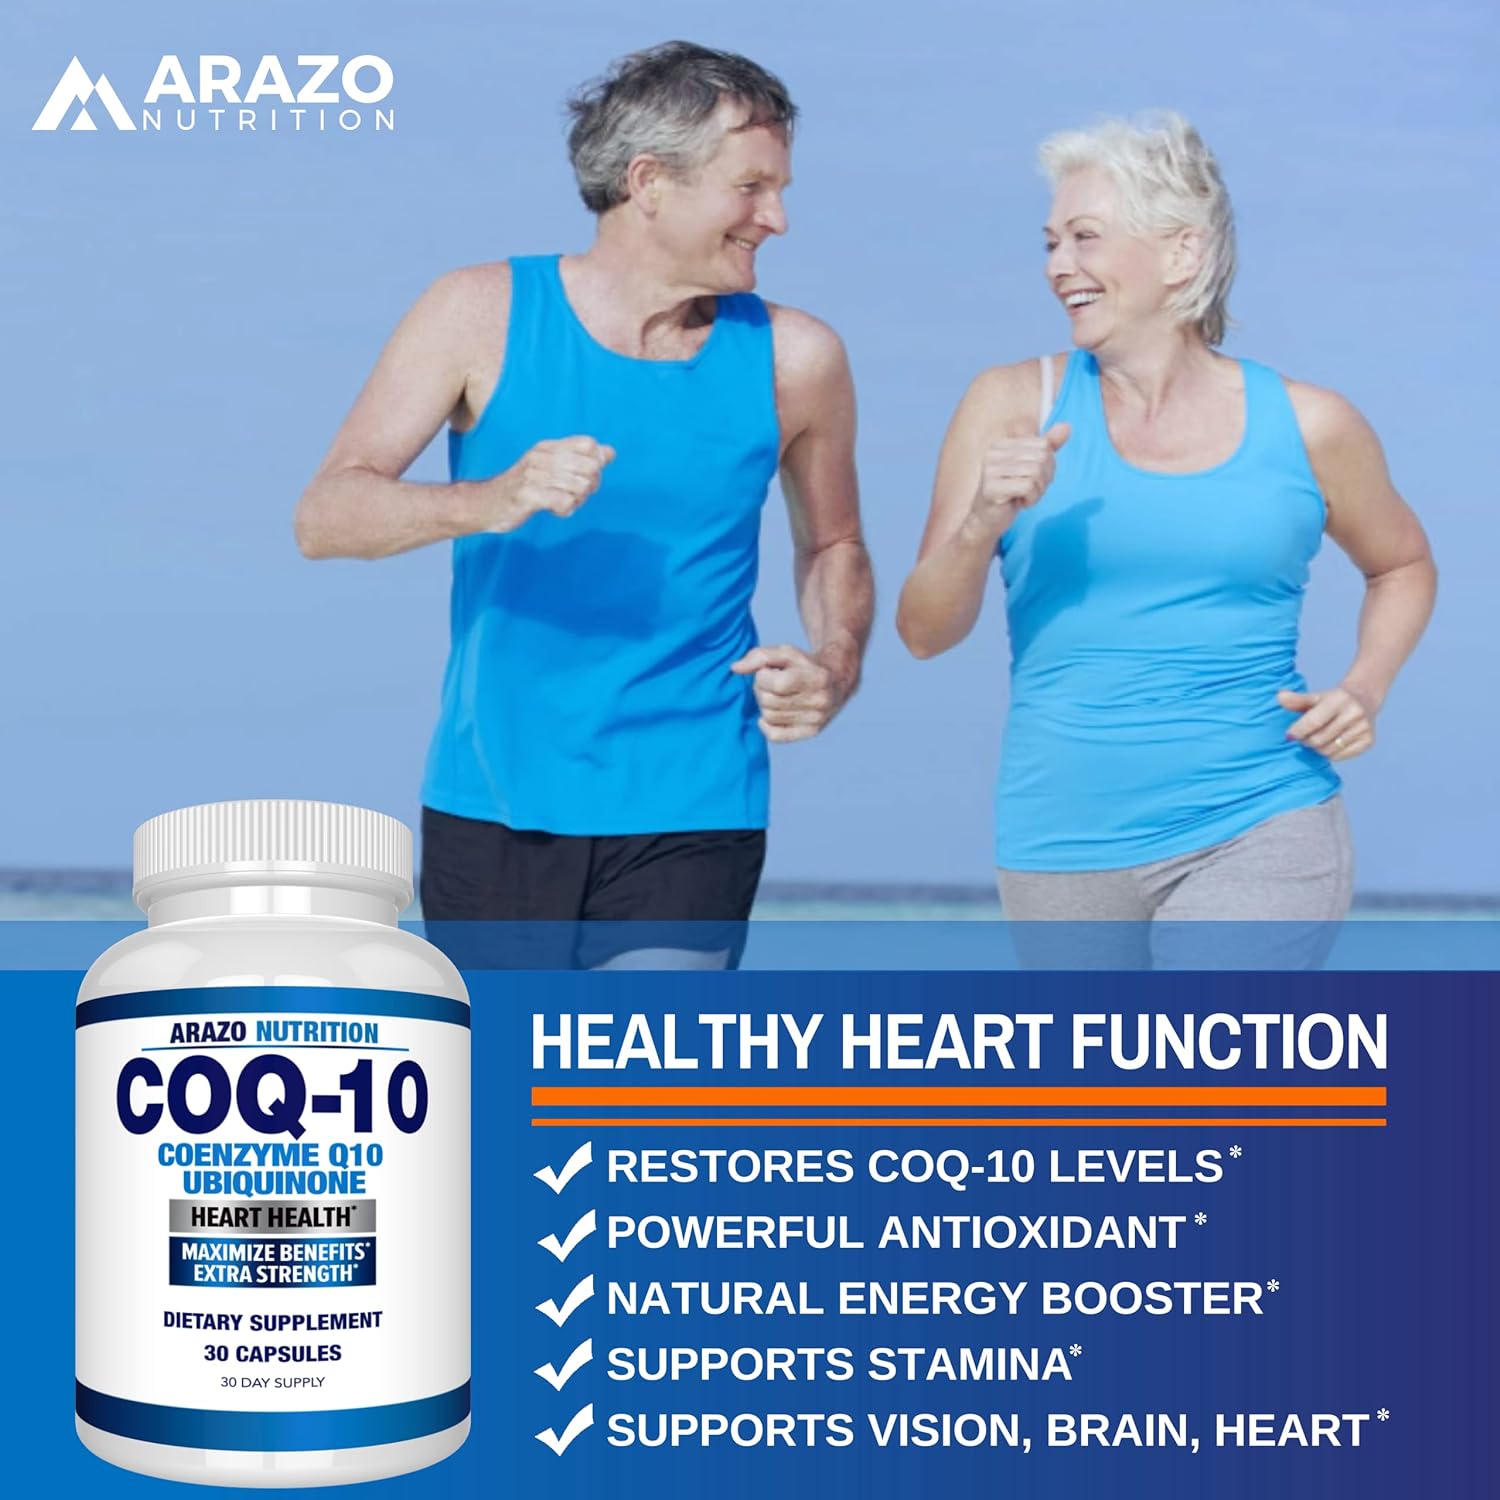 Arazo Nutrition CoQ10 Ubiquinone Coenzyme Q10-200mg Maximum Strength N